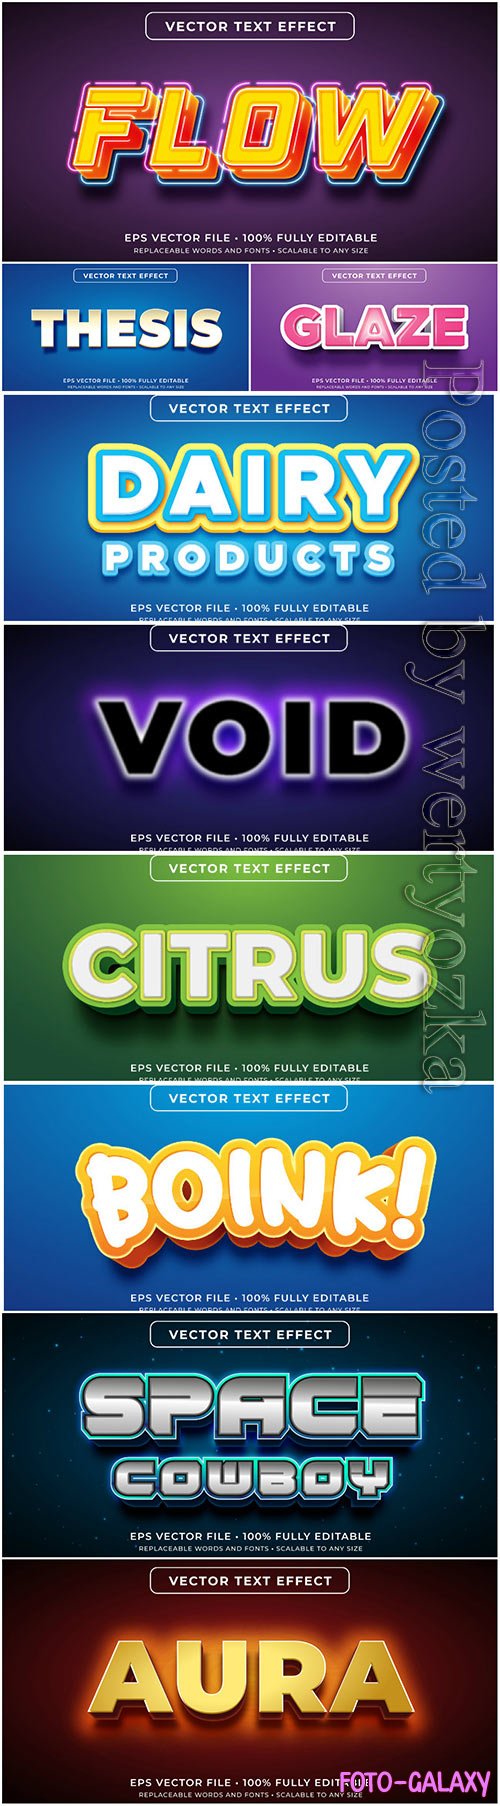 3d editable text style effect vector vol 103